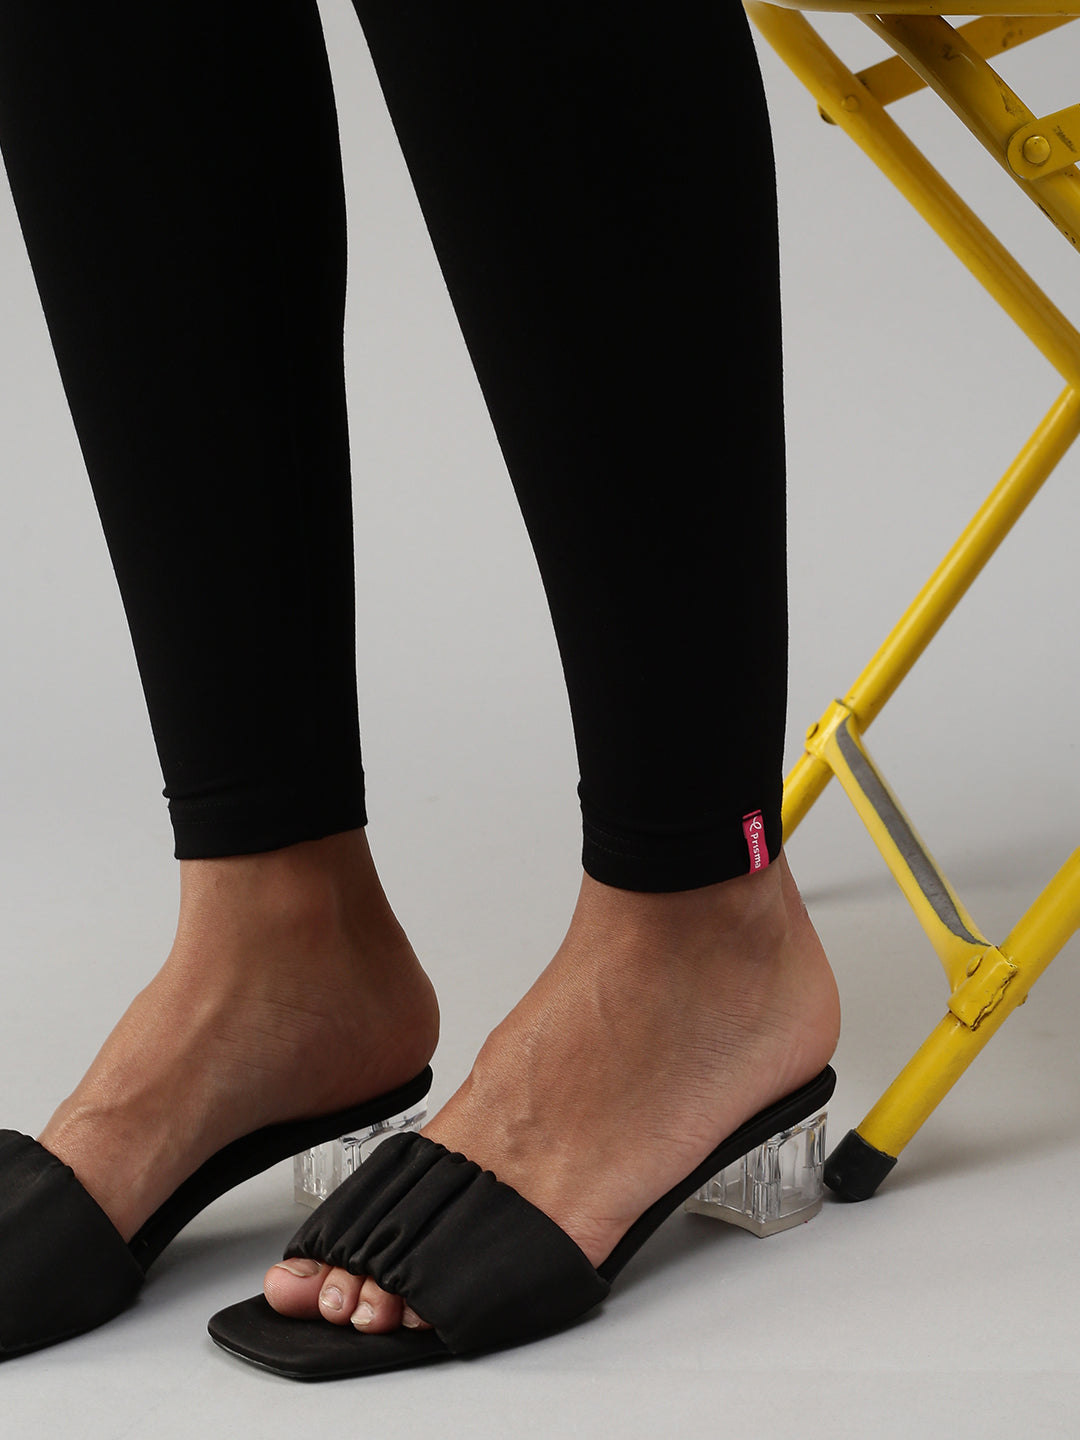 Shop Prisma's Black Ankle Leggings for Women